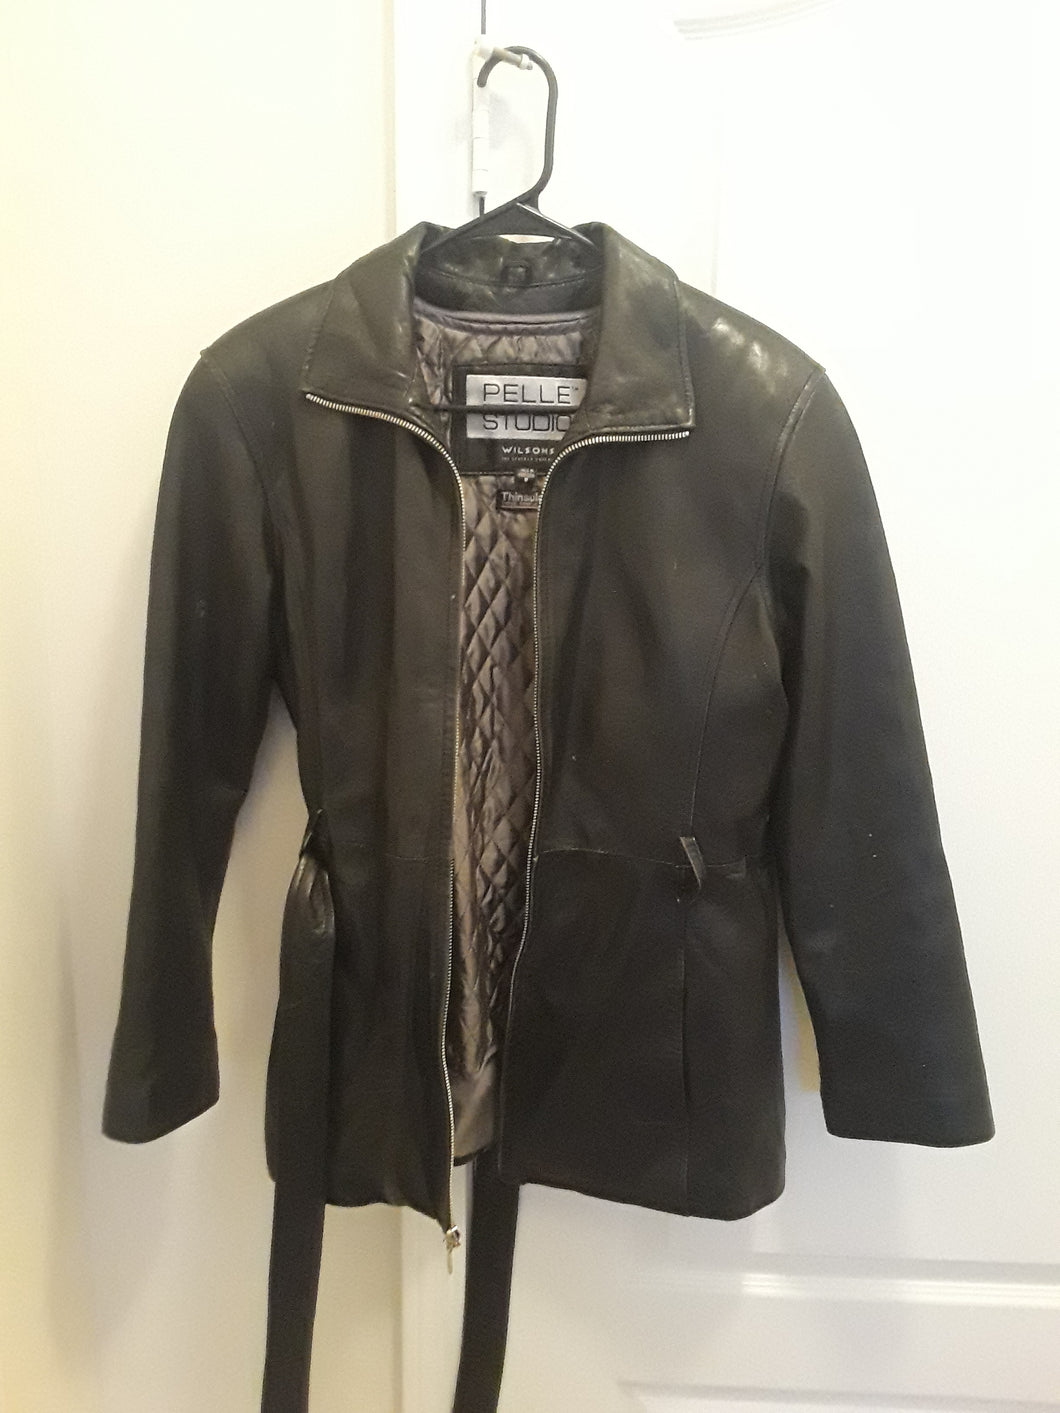 Wilson's Pelle Studio Leather Jacket